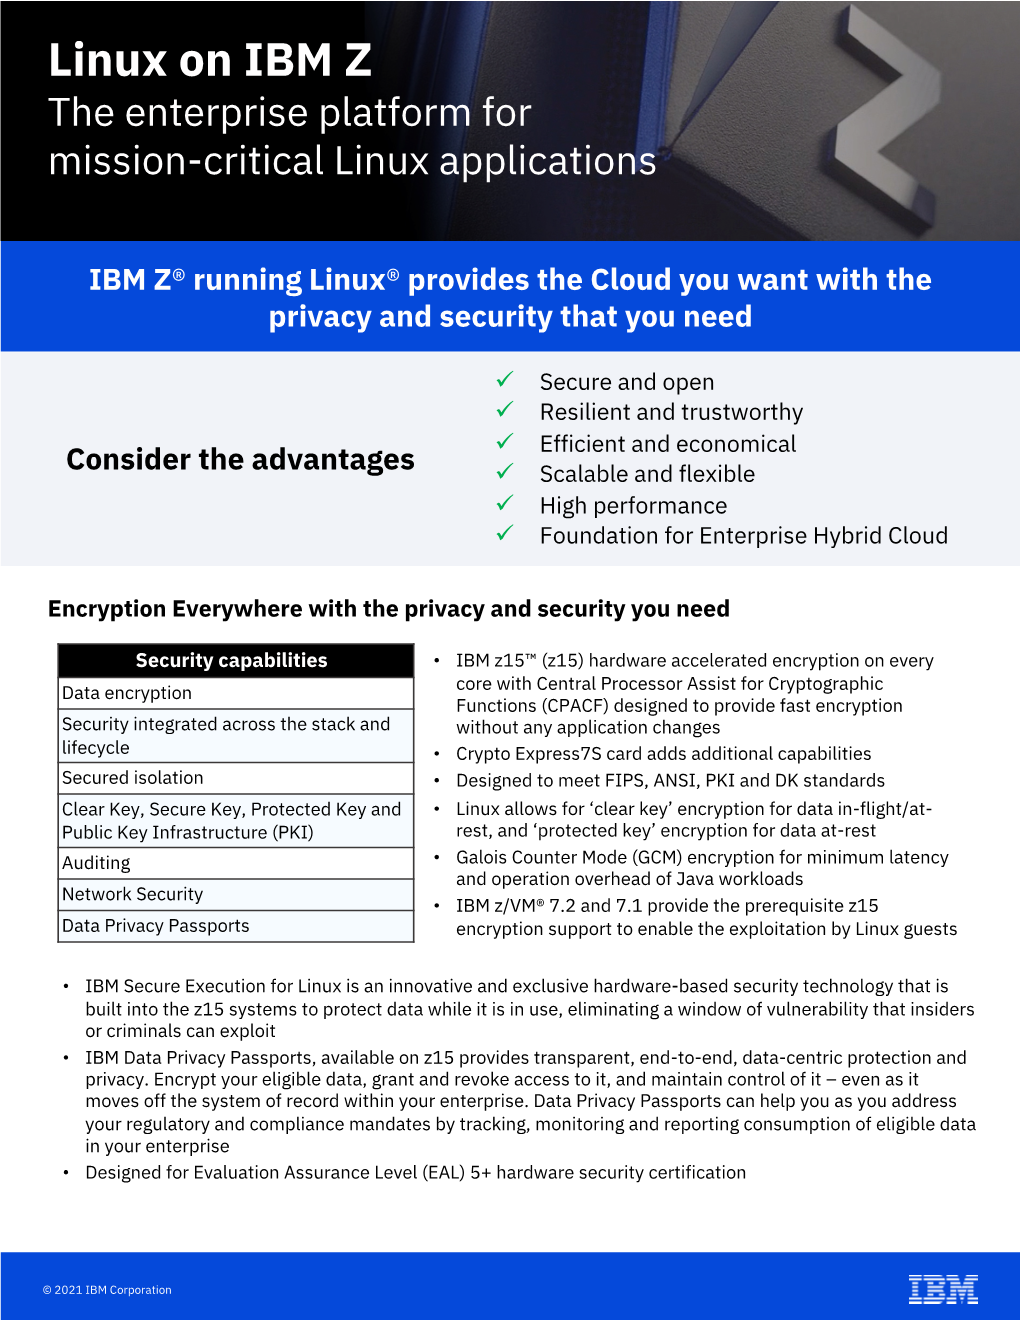 Linux on IBM Z the Enterprise Platform for Mission-Critical Linux Applications